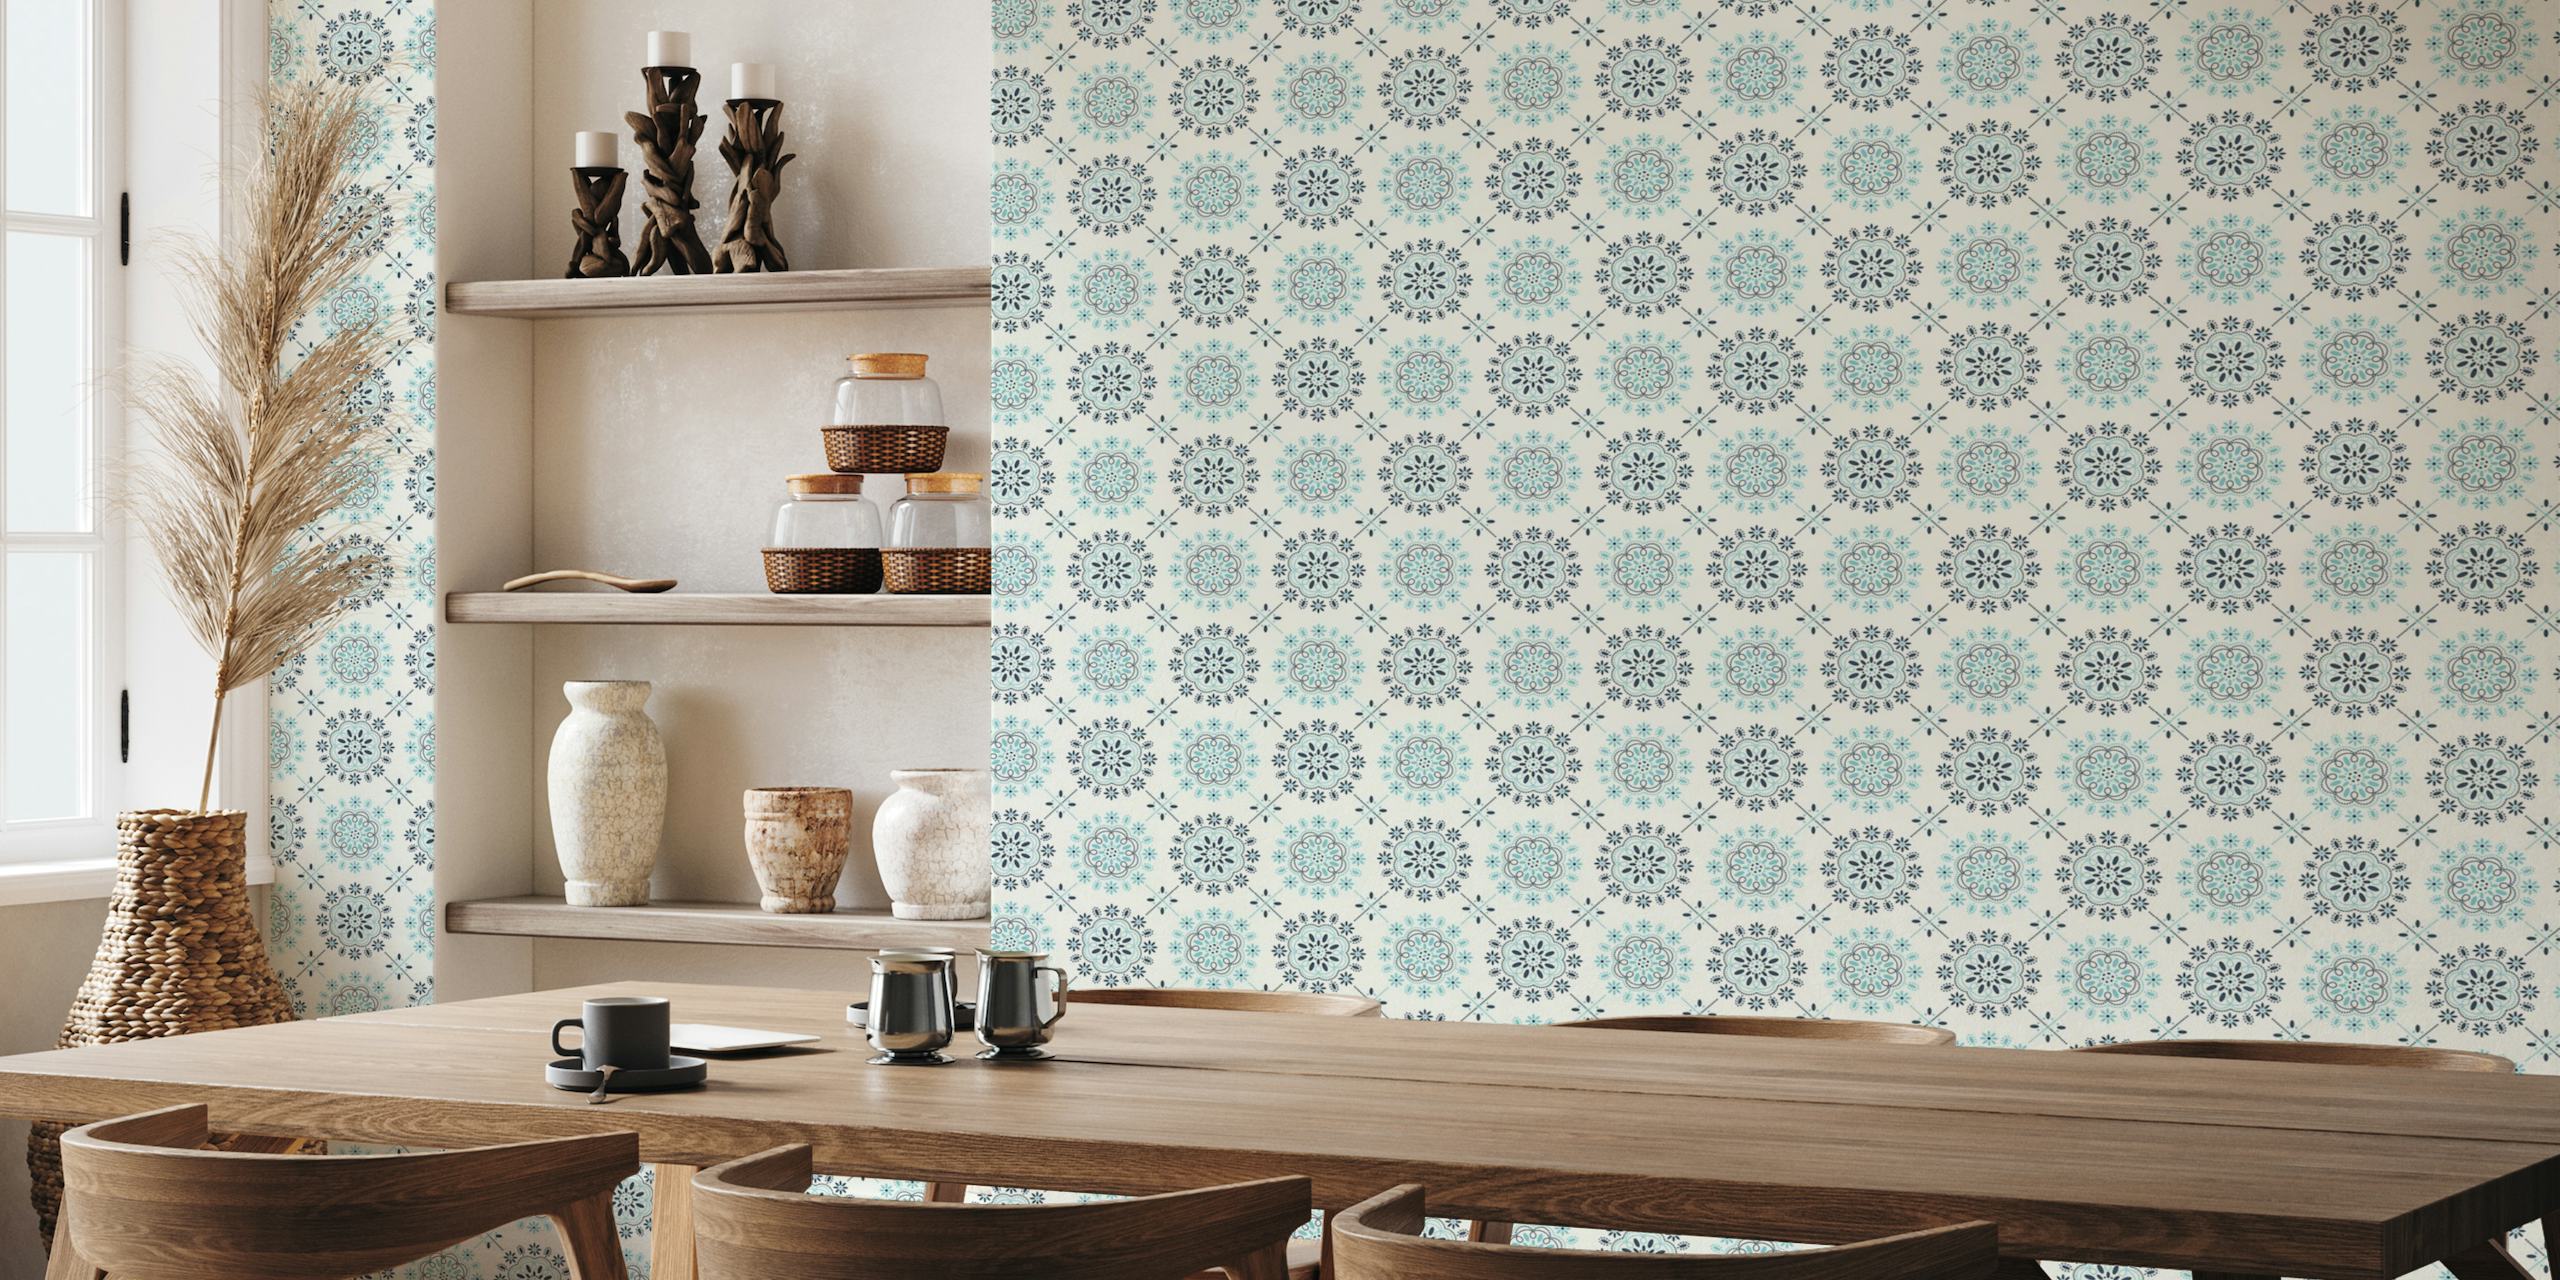 Blue and white kitchen tile tapetit